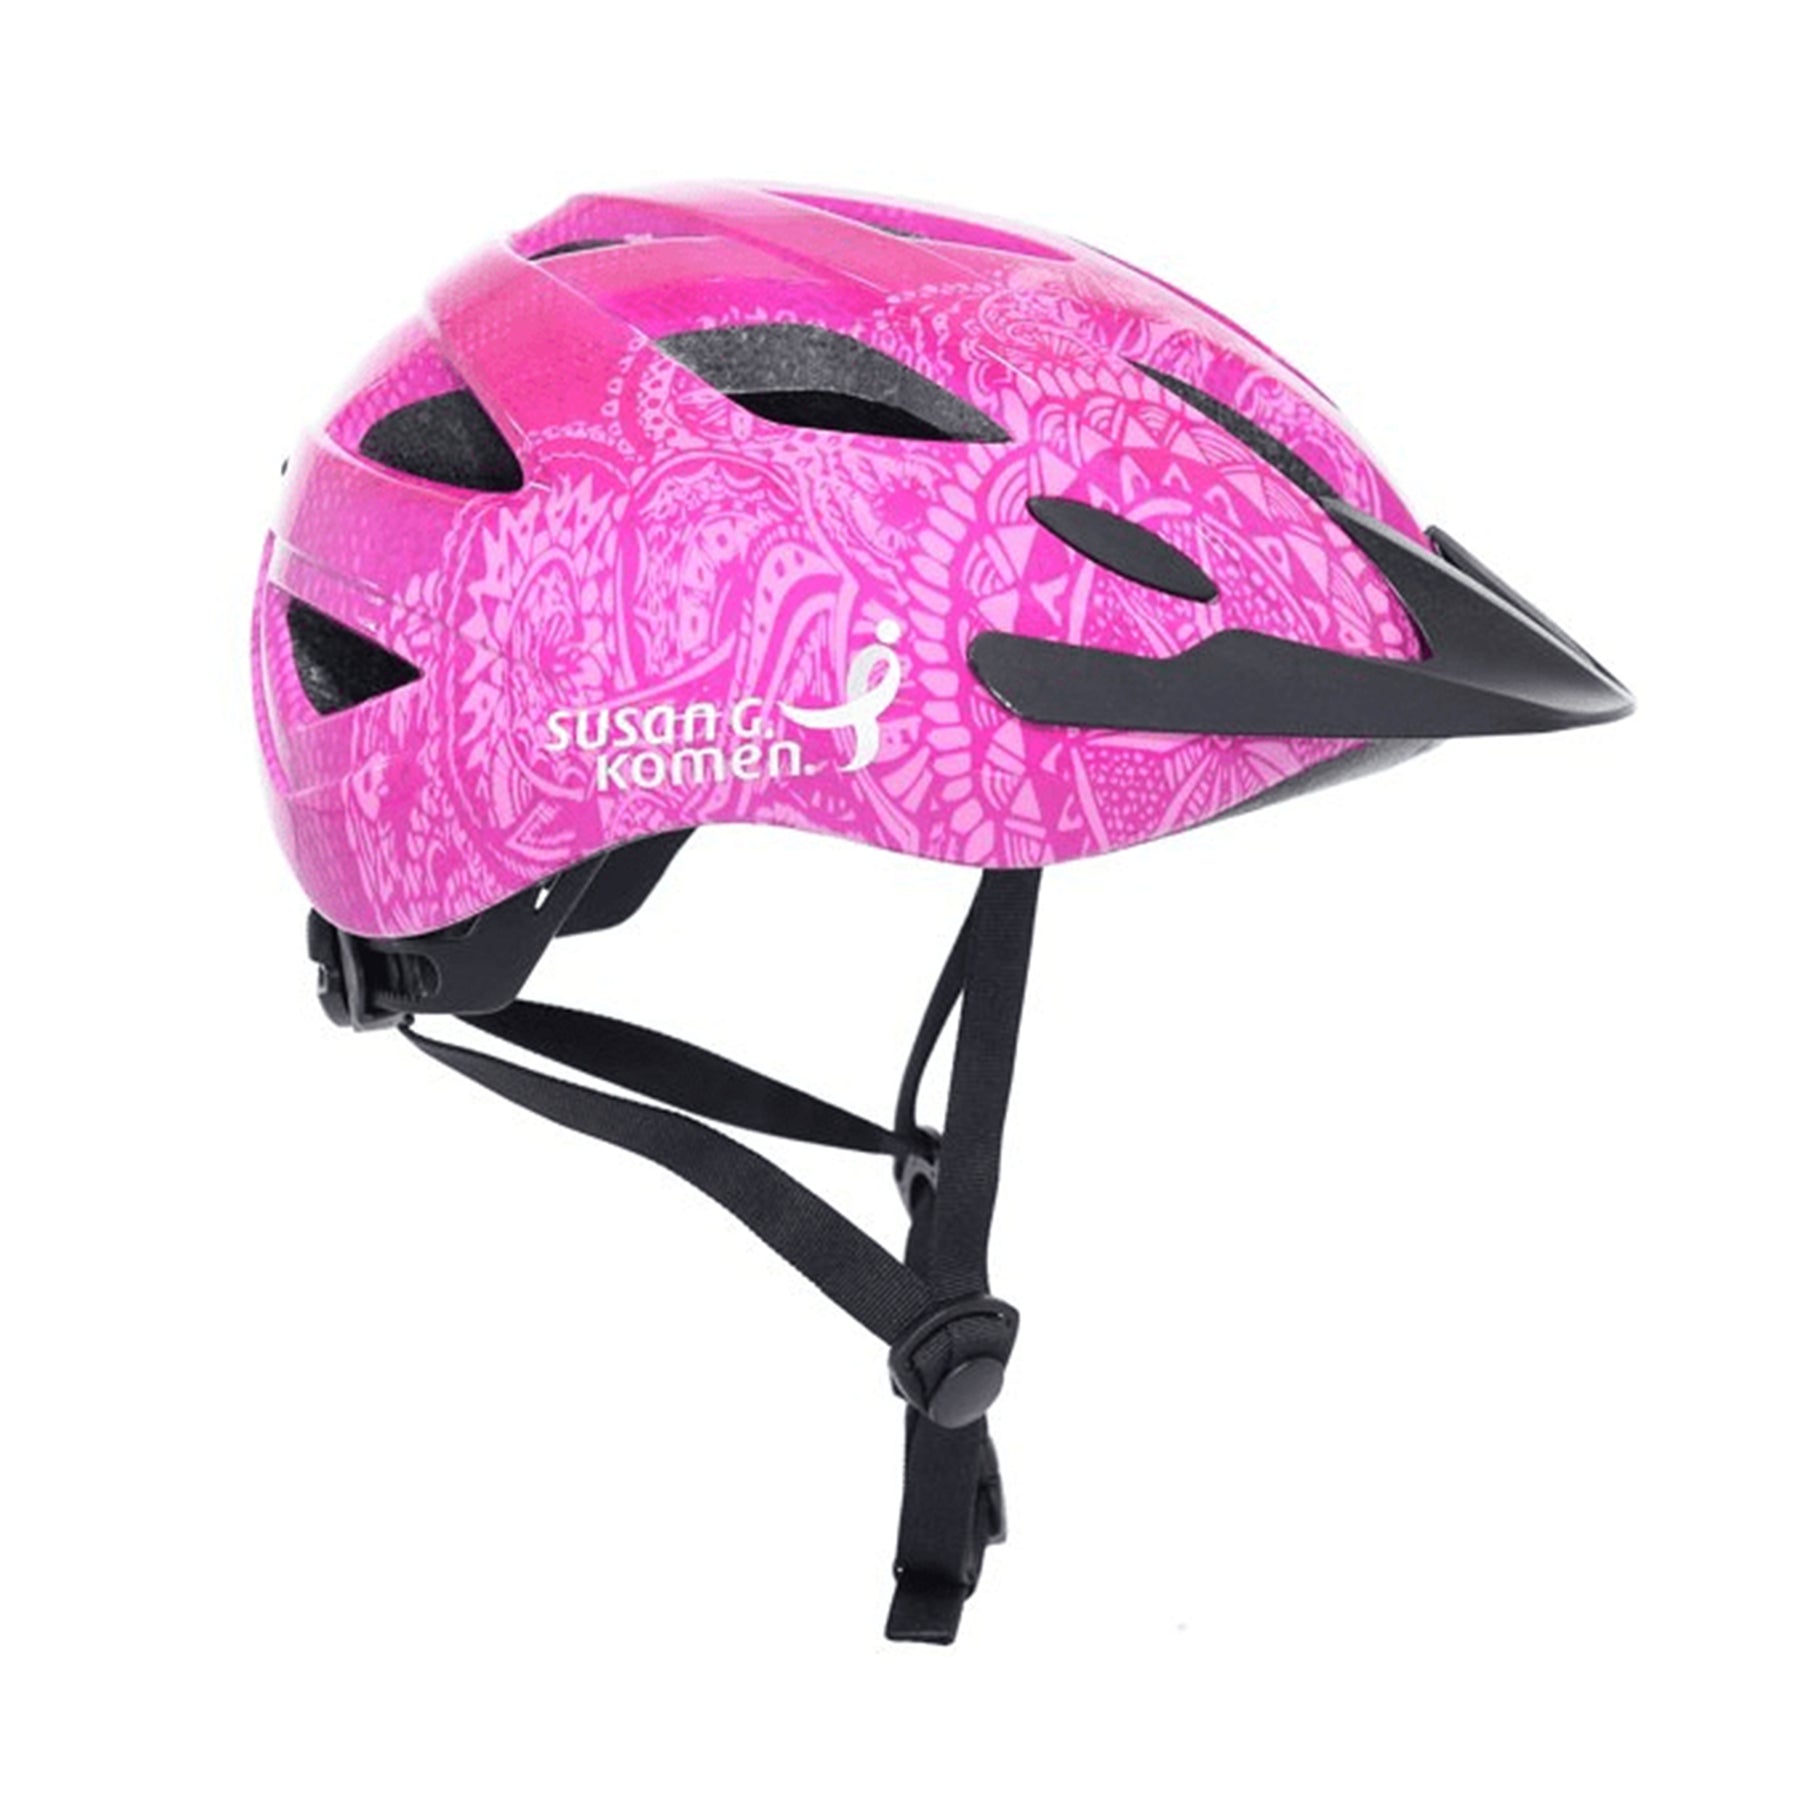 Susan G. Komen® Sport Adult Bike Helmet | Helmet for Women Ages 13+